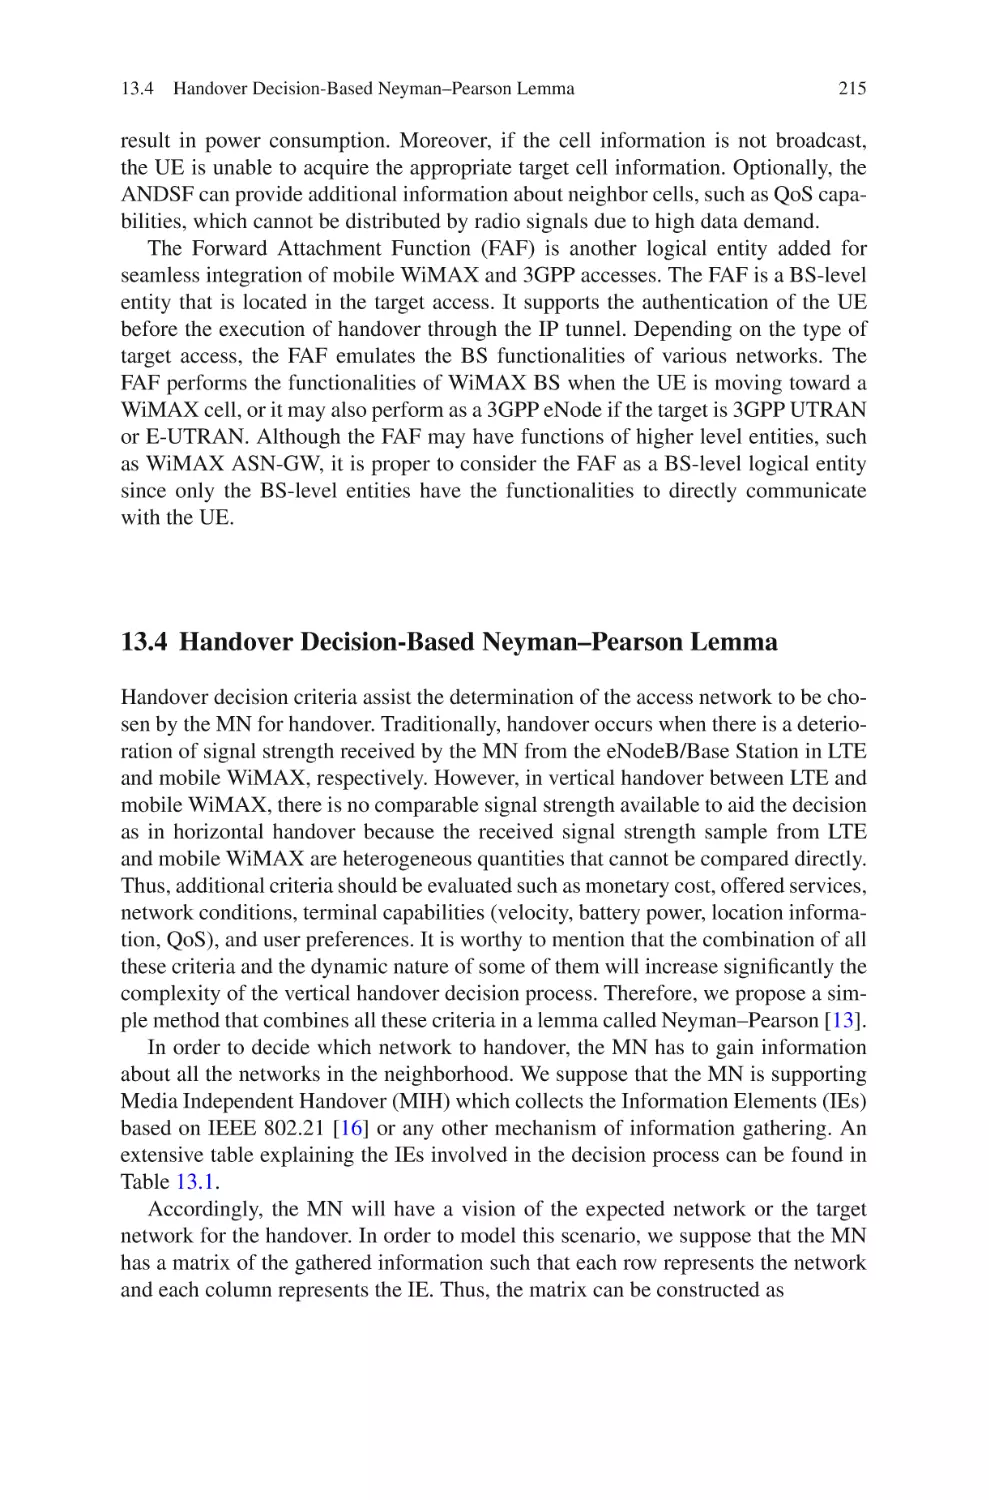 13.4  Handover Decision-Based Neyman--Pearson Lemma